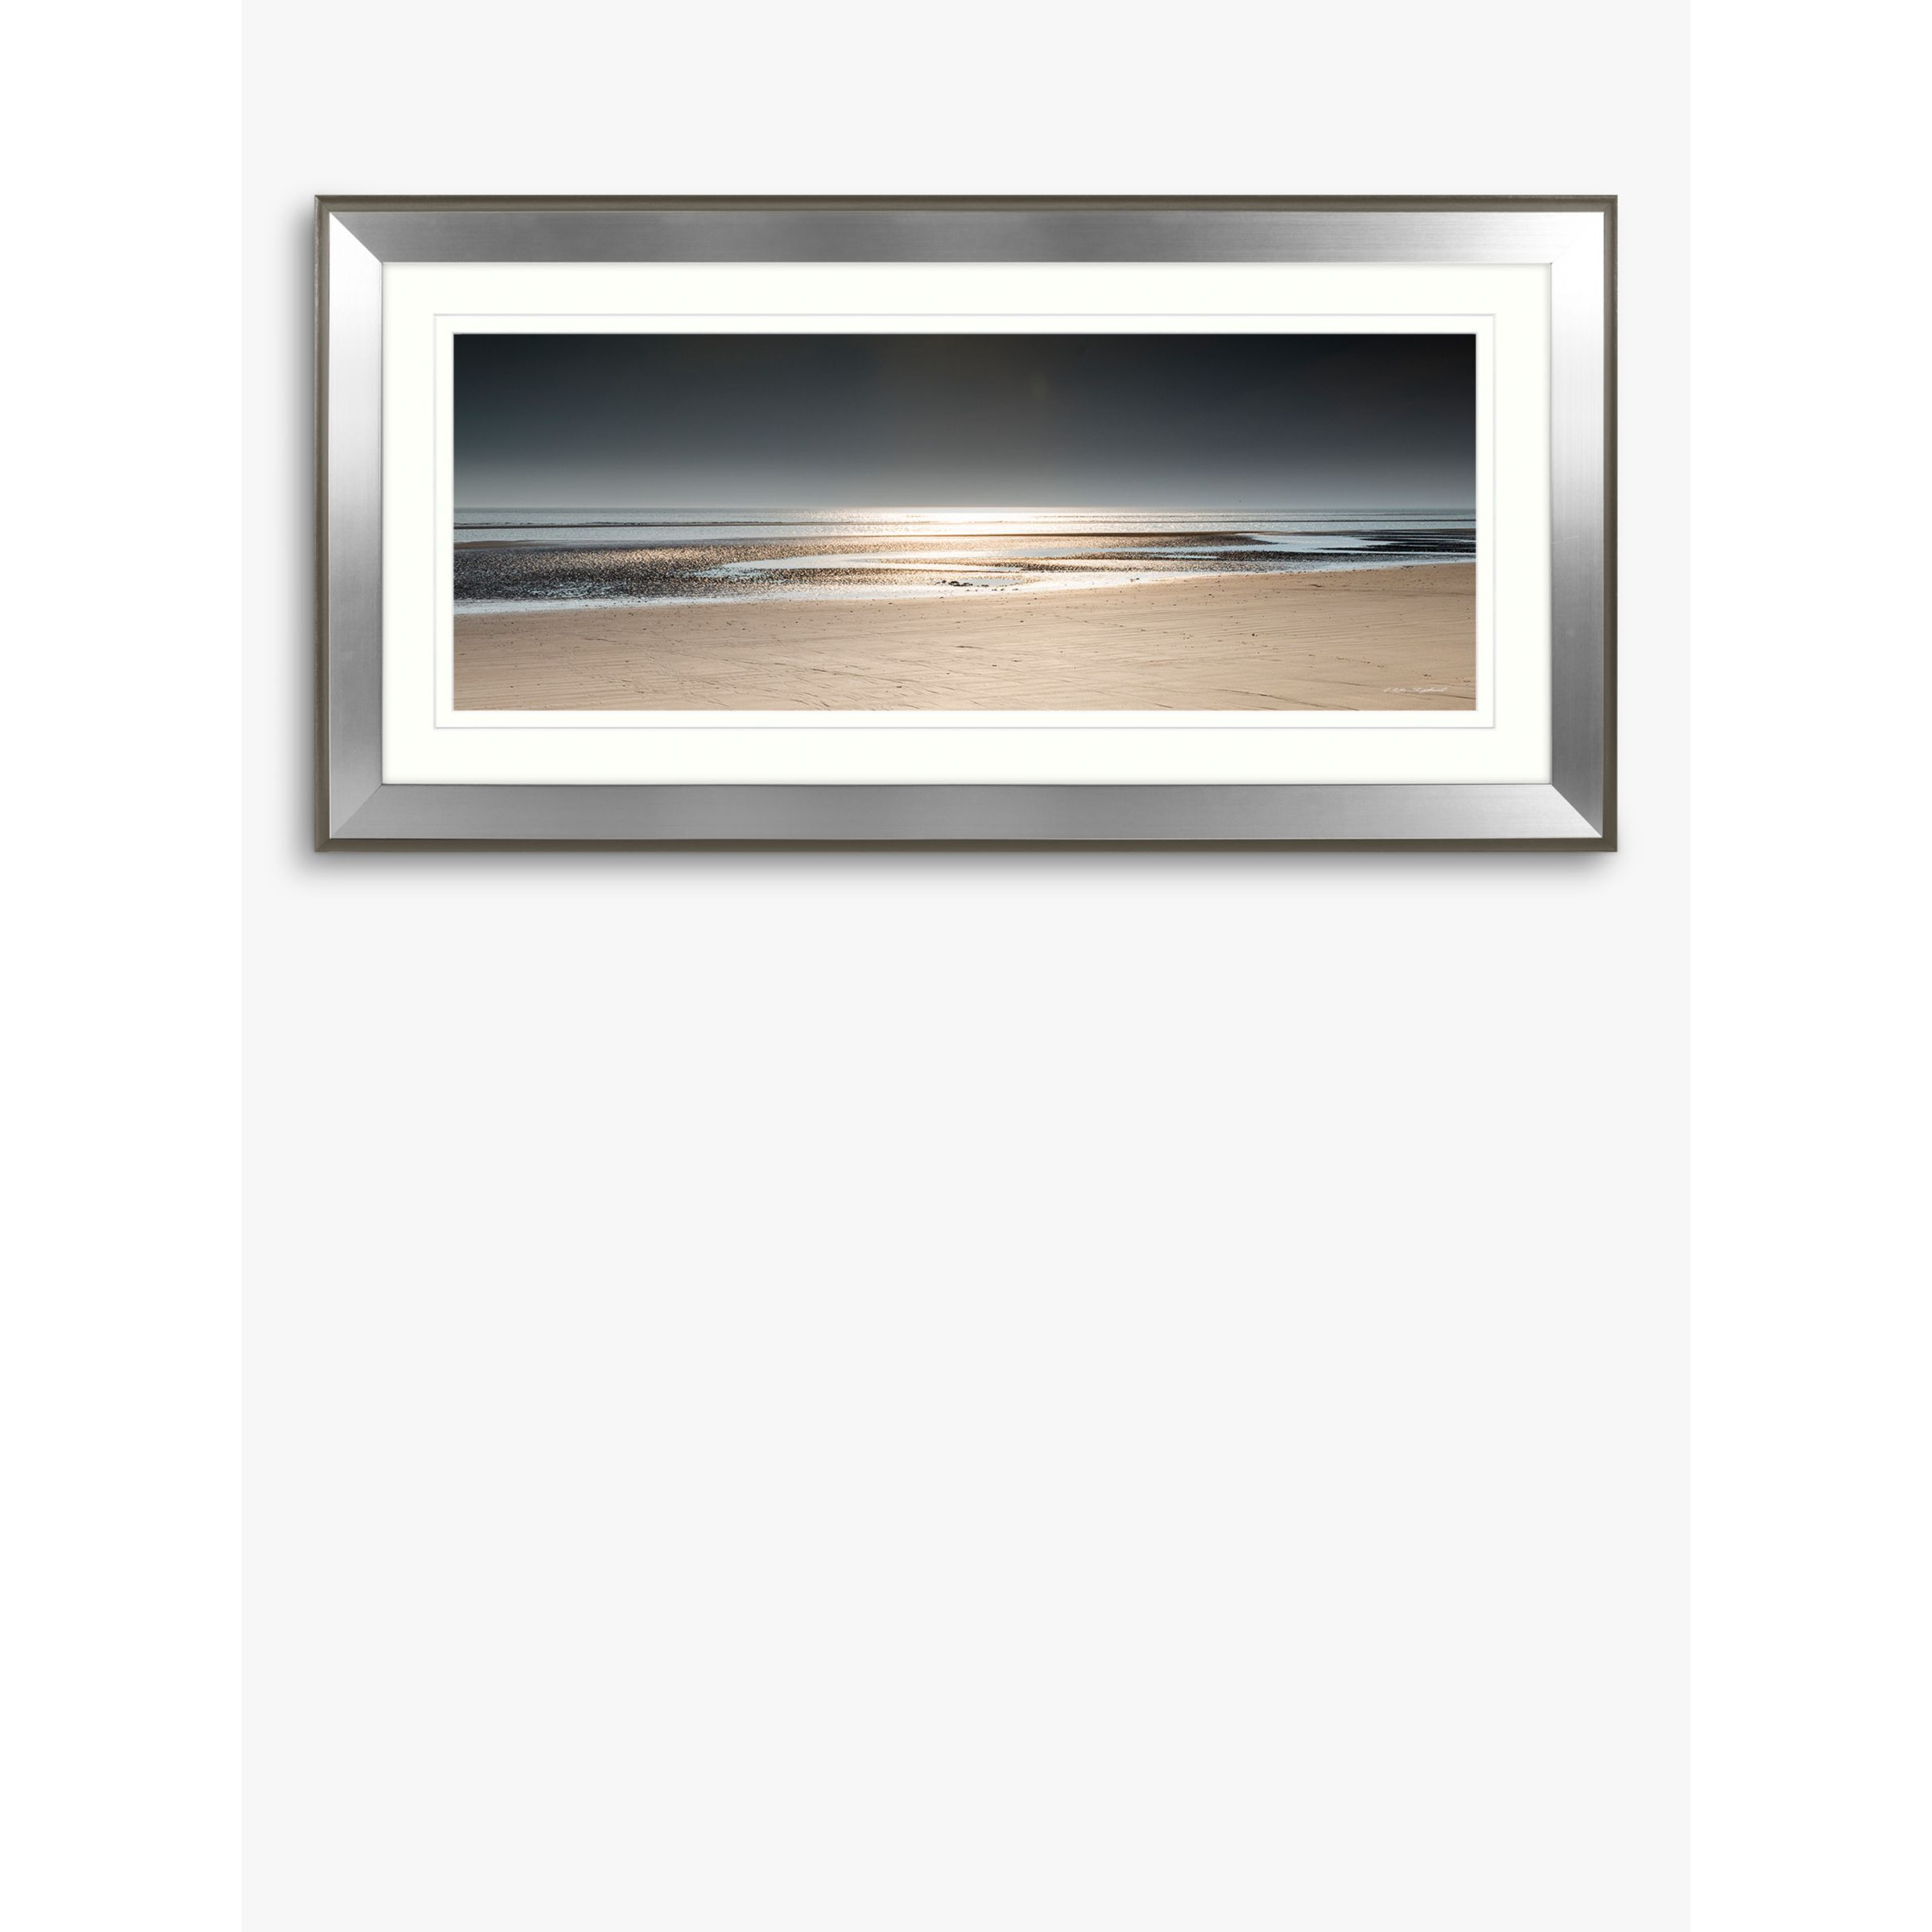 John Lewis Mike Shepherd 'Coastal Haze' Framed Print & Mount, 110 x 55cm - image 1